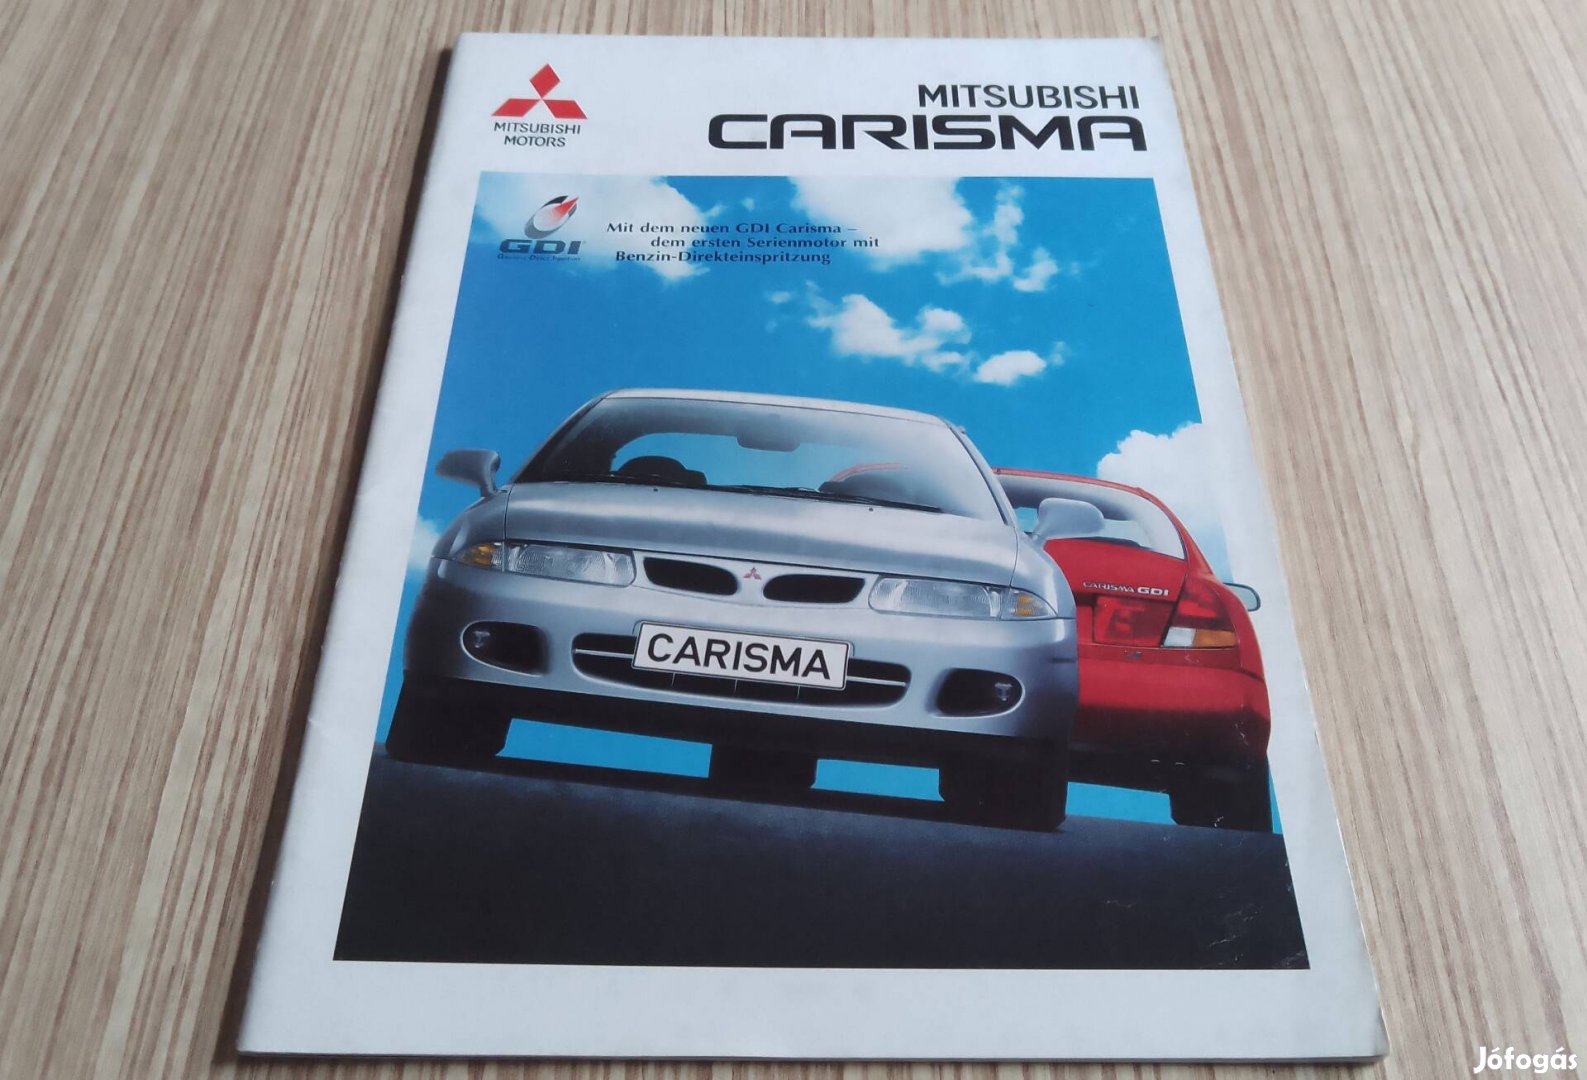 Mitsubishi Carisma (1997) prospektus, katalógus.